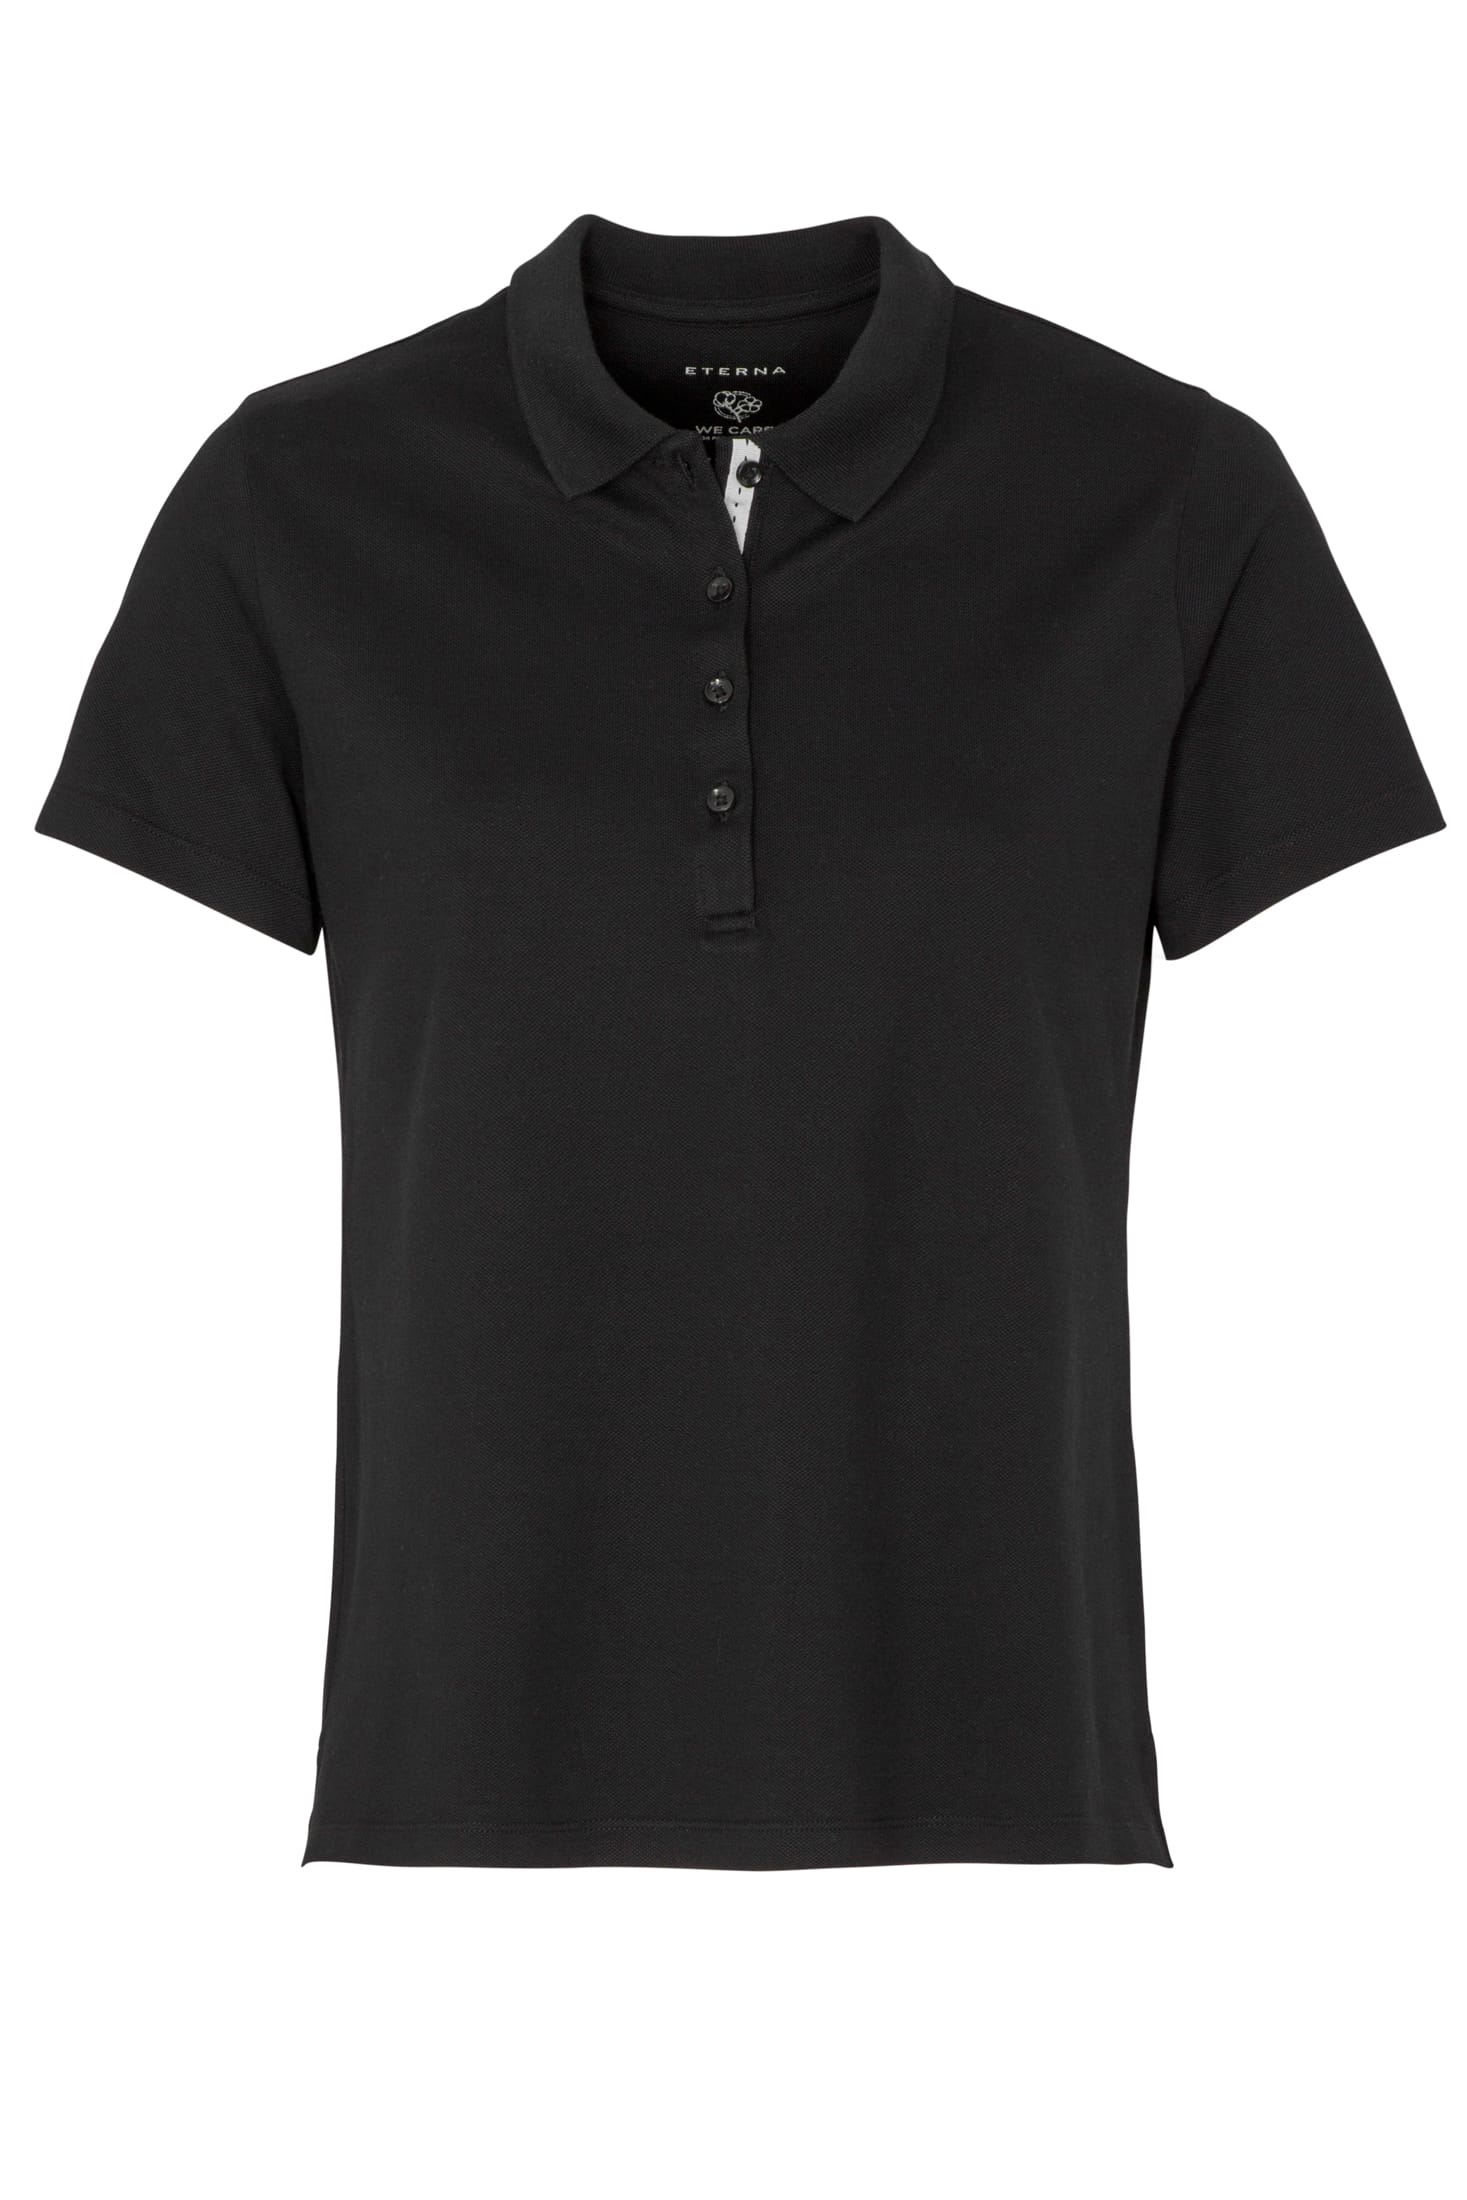 ETERNA CLASSIC FIT Poloshirt schwarz pique 5535-39-H530 | Eterna |  Poloshirts | Damen Bekleidung | Jeans-Manufaktur